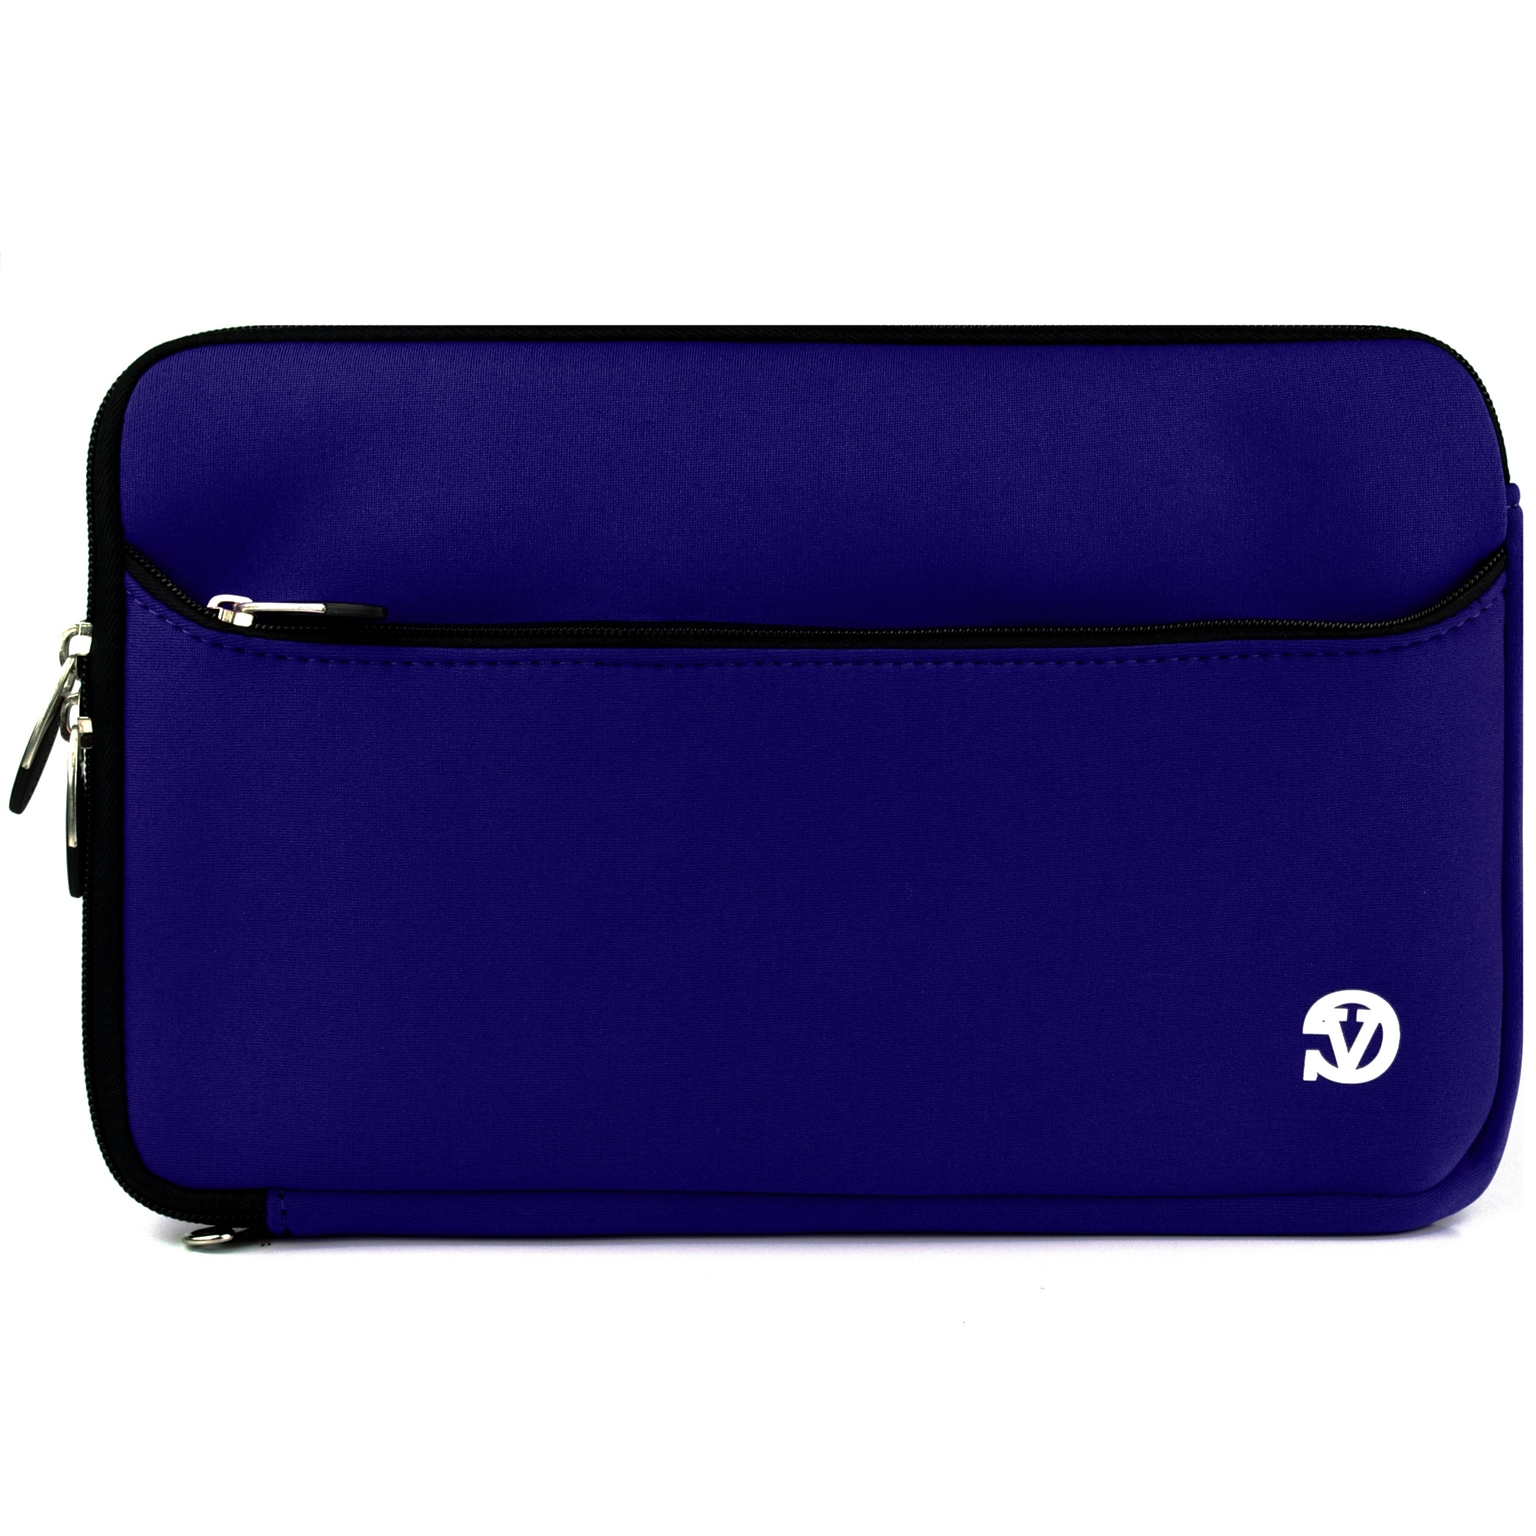 Vangoddy 15 Neoprene Protective Laptop Carrying Sleeve (Blue)